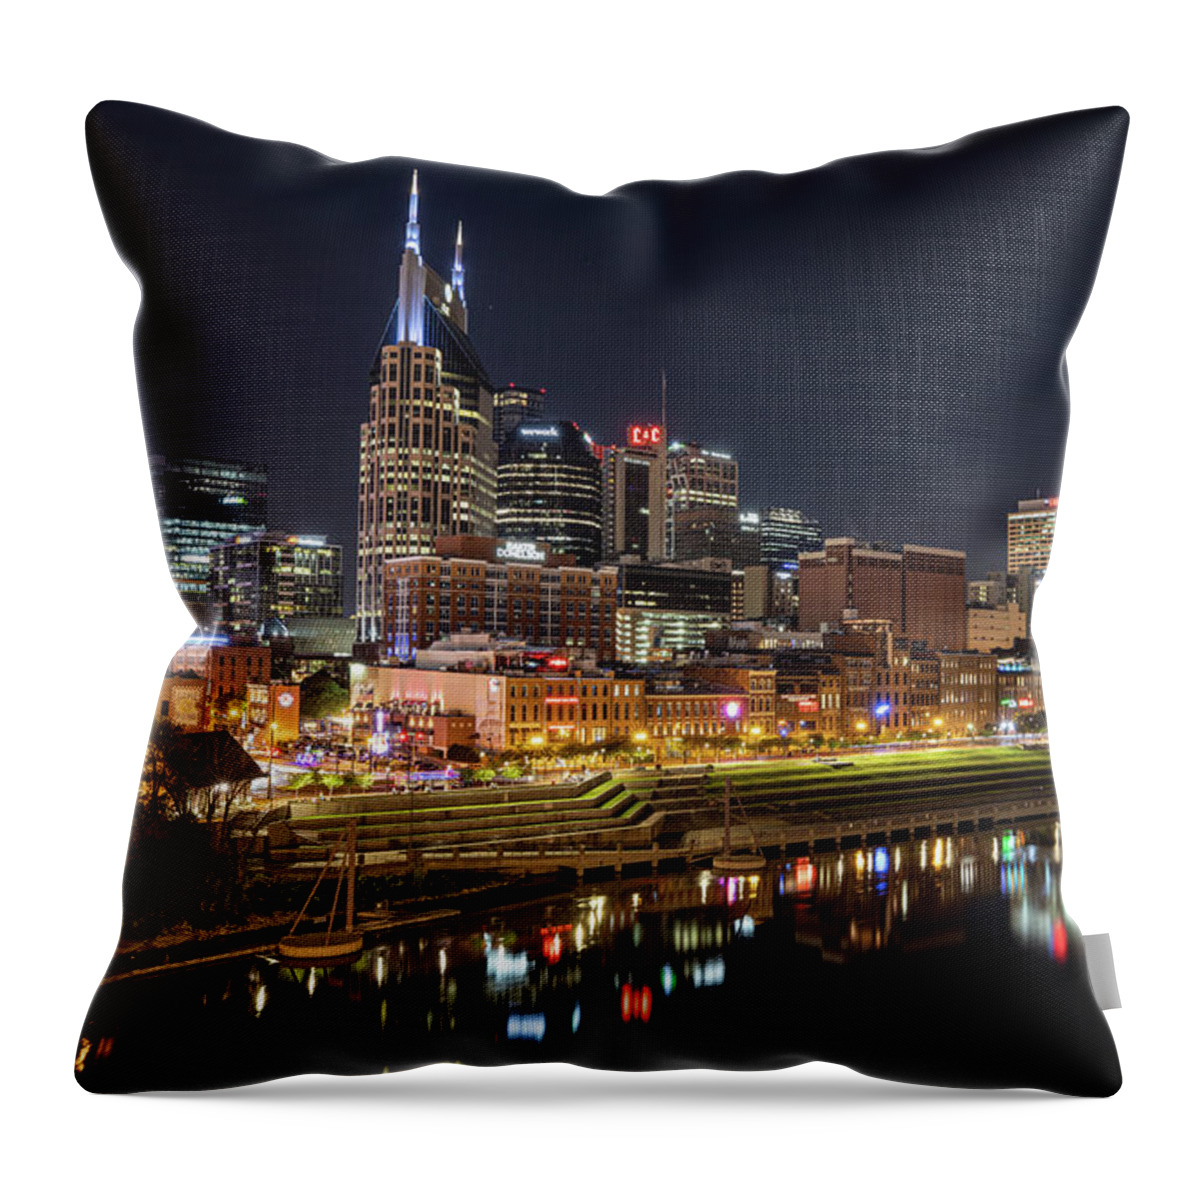 Nashville Throw Pillow featuring the photograph Nashville At Night by Jordan Hill